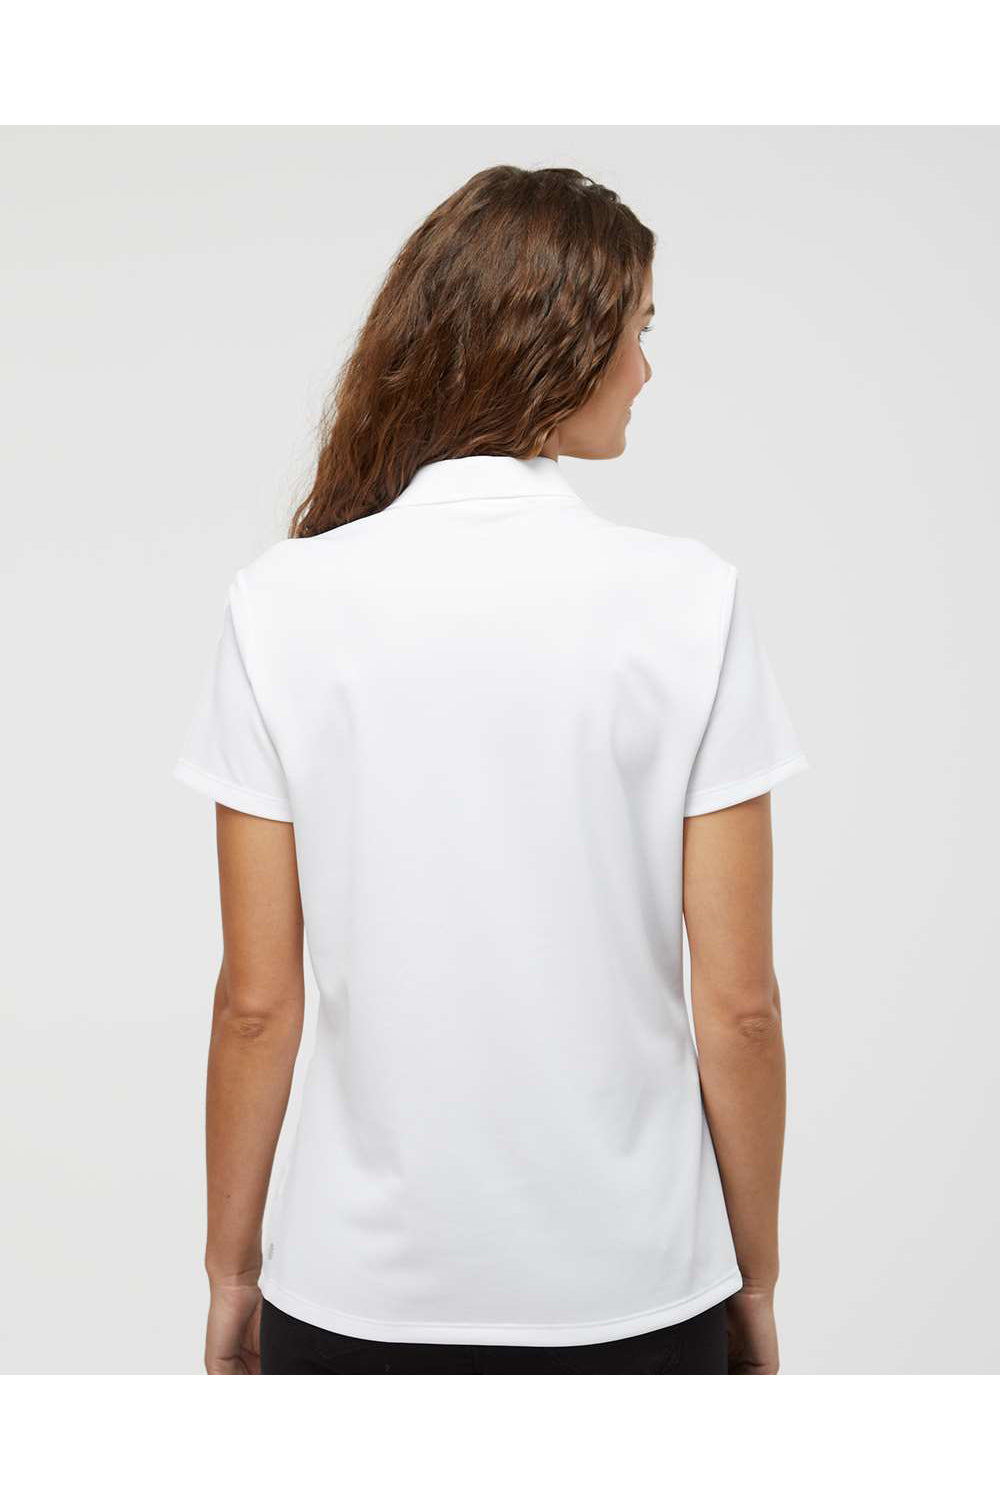 Adidas A431 Womens Basic Short Sleeve Polo Shirt White Model Back